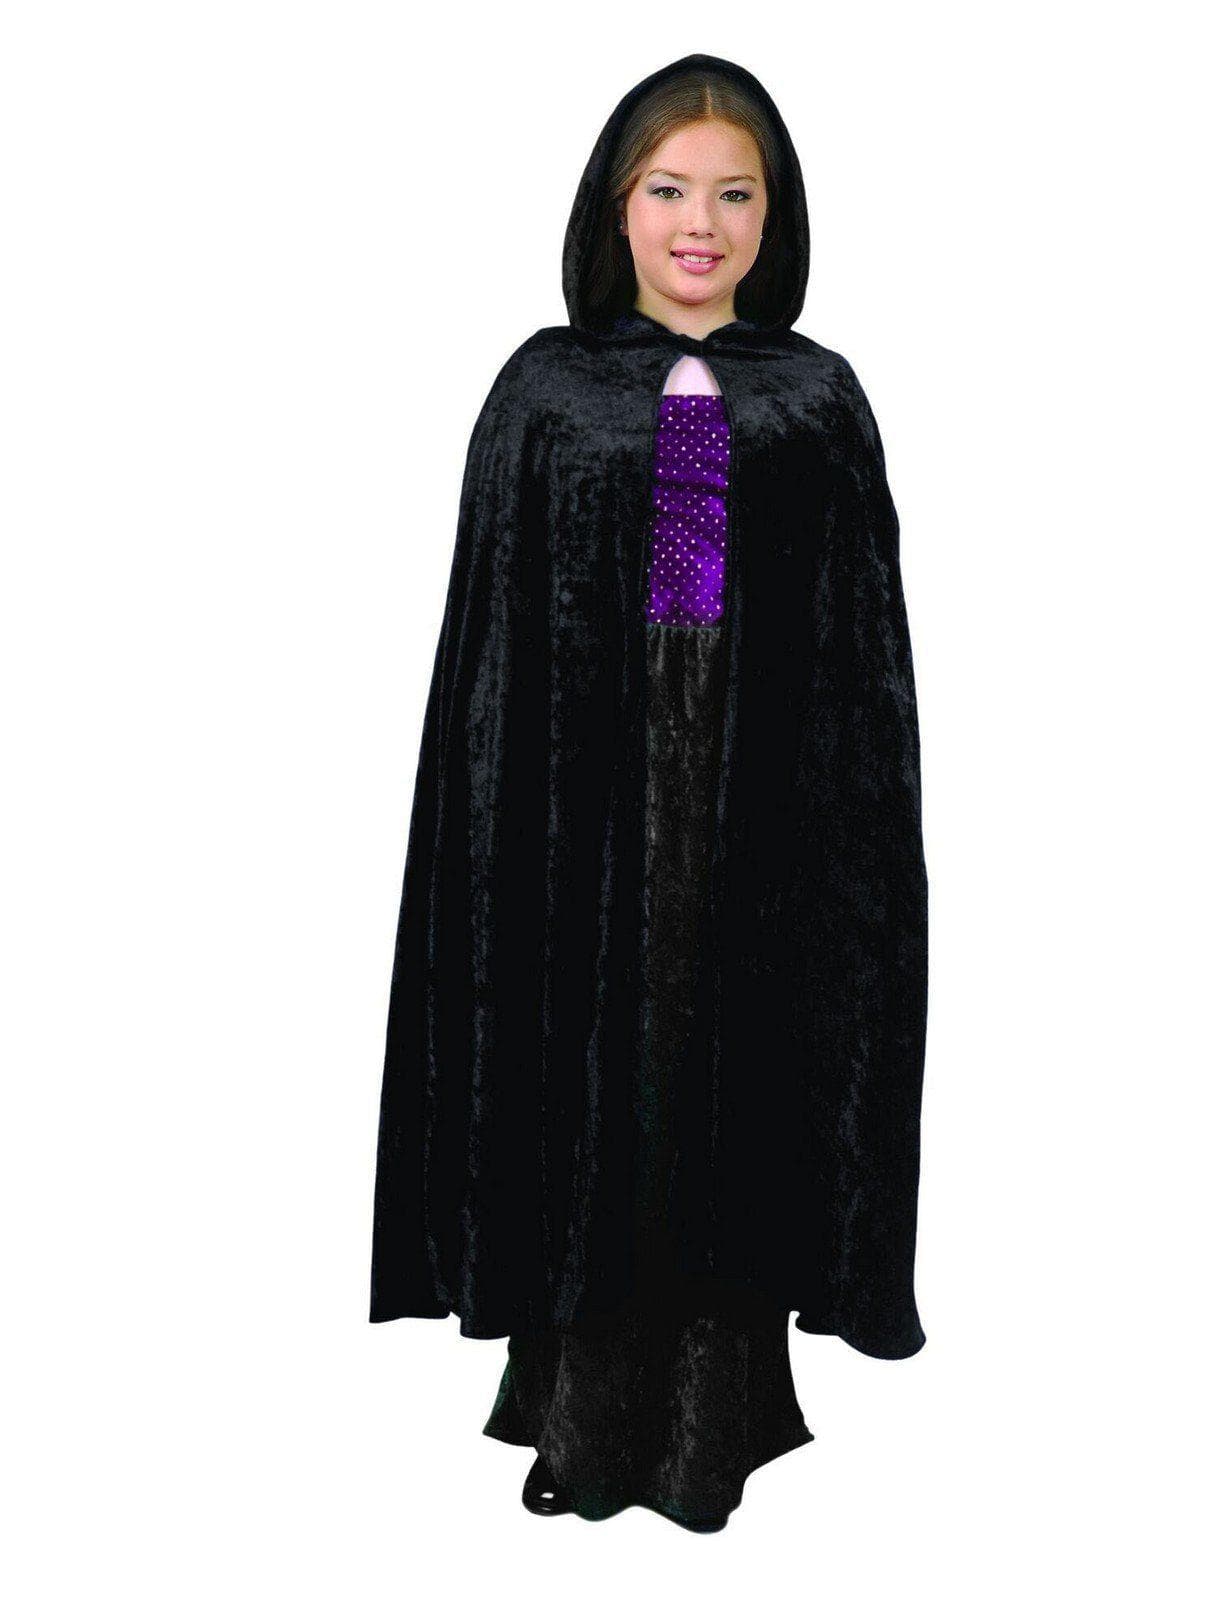 Kid's Hooded Cloak Black Costume - costumes.com